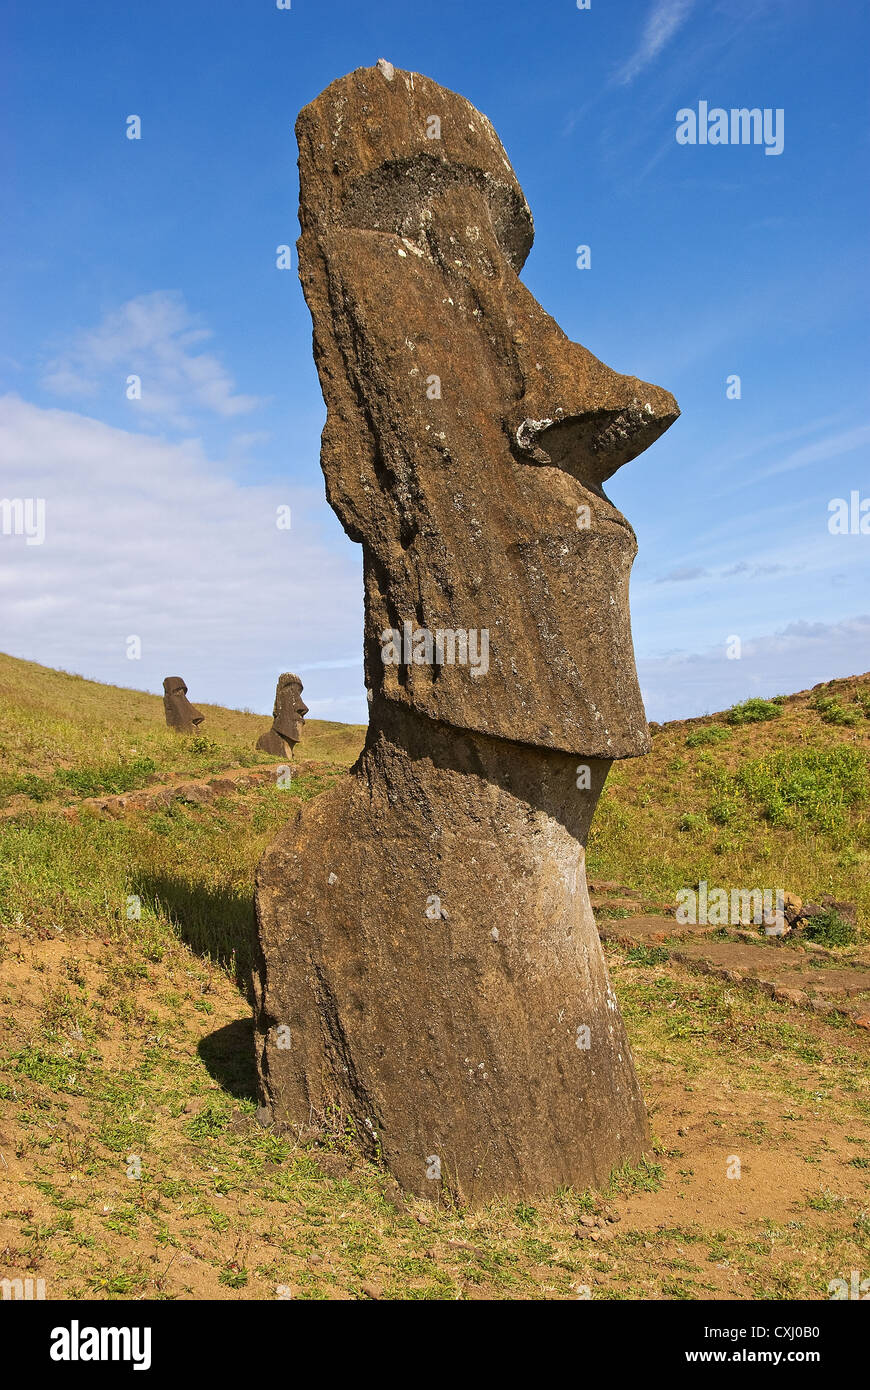 Elk198-5296v Cile, Isola di Pasqua, Rano Raraku, moai statue Foto Stock